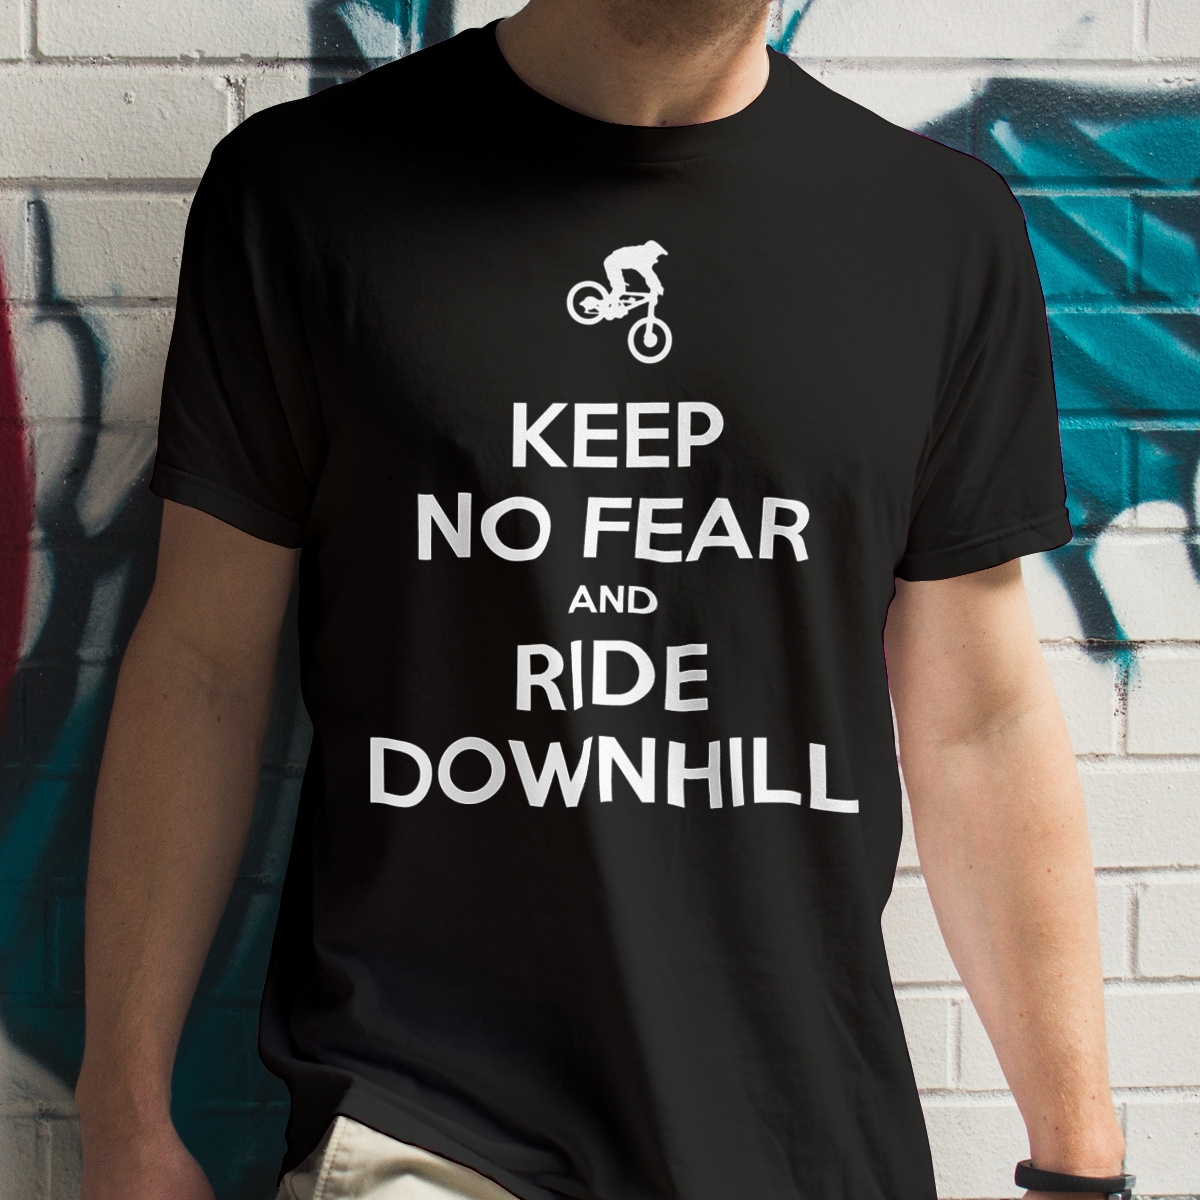 Keep Calm Downhill - Męska Koszulka Czarna